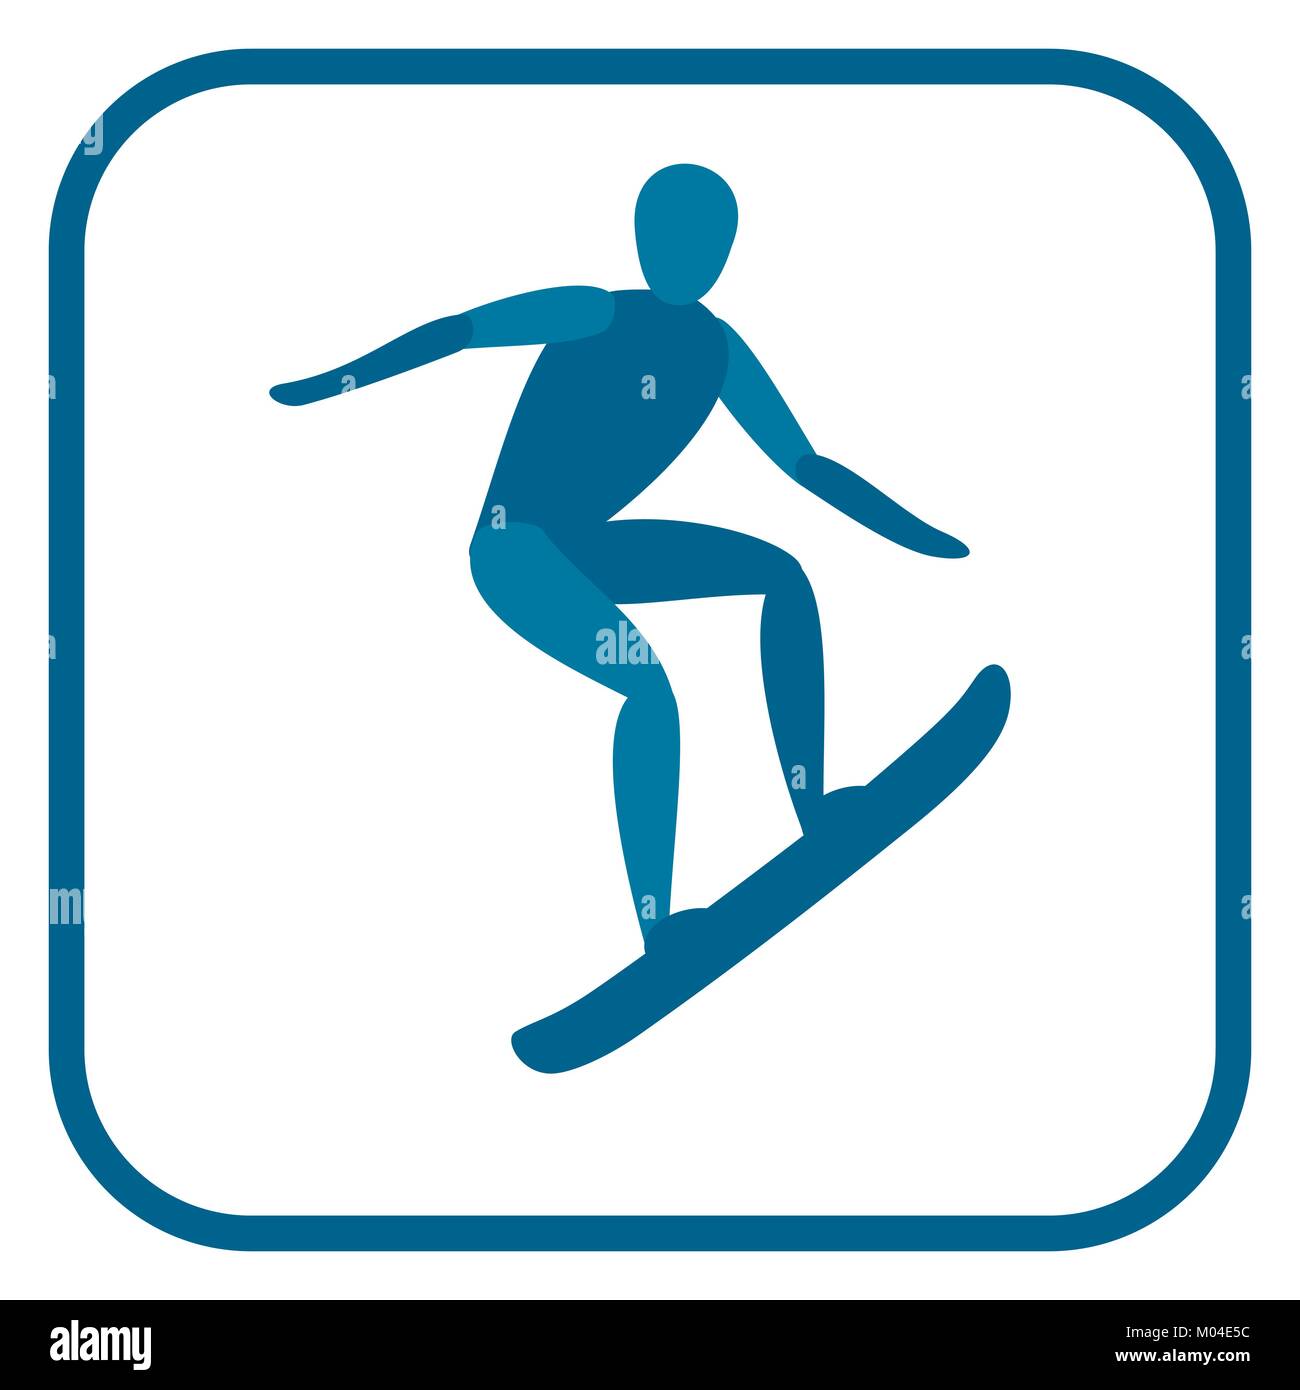 Snowboarding athlete emblem. Stock Vector